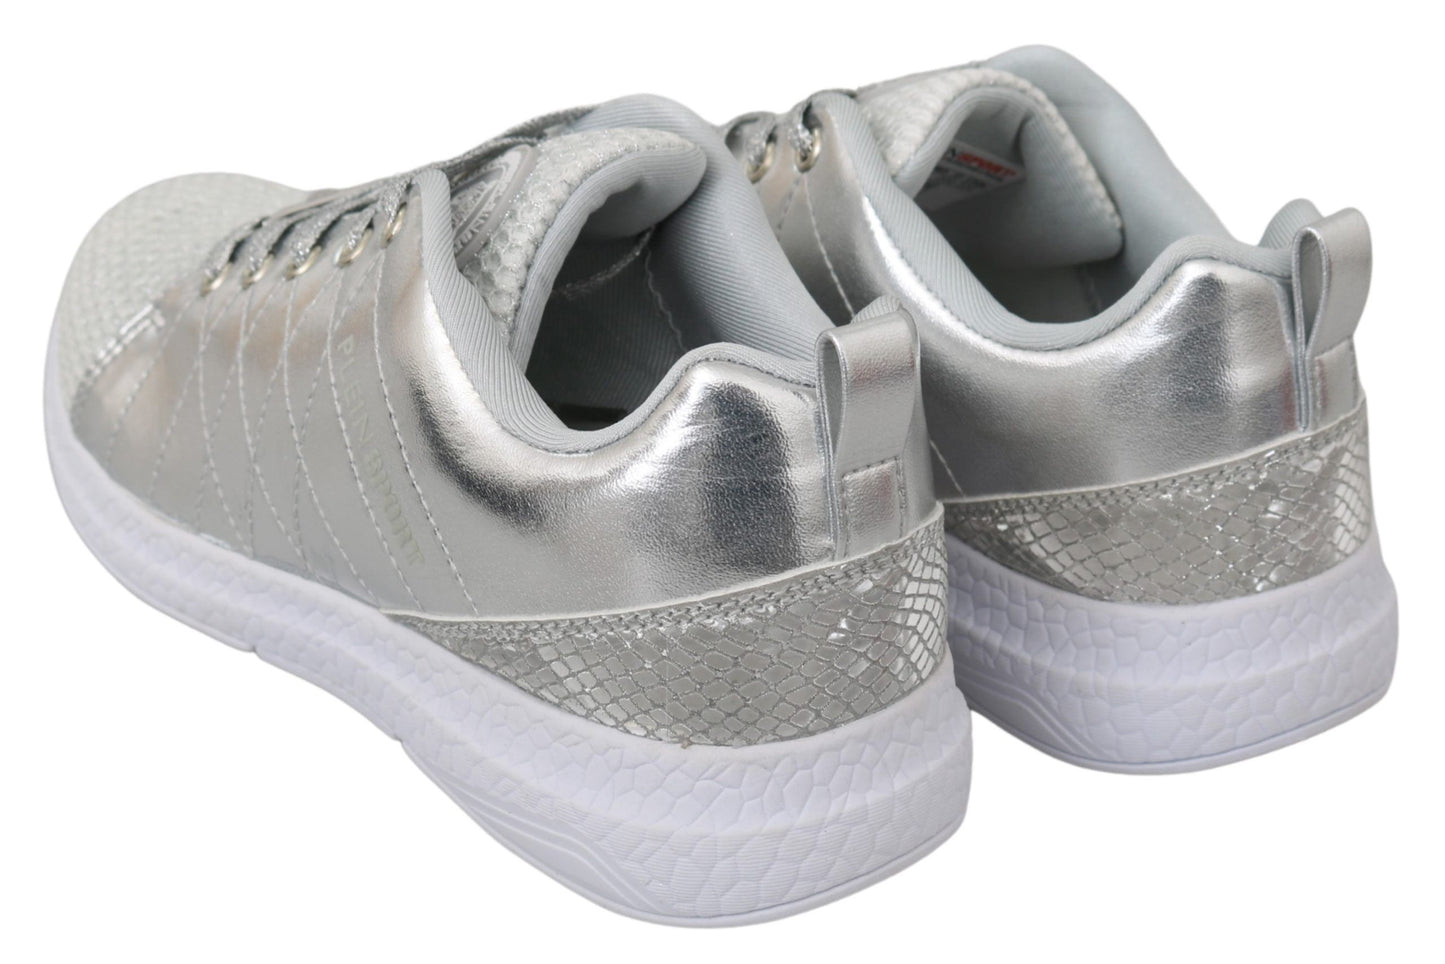 Sleek Silver Sneakers for Trendsetters